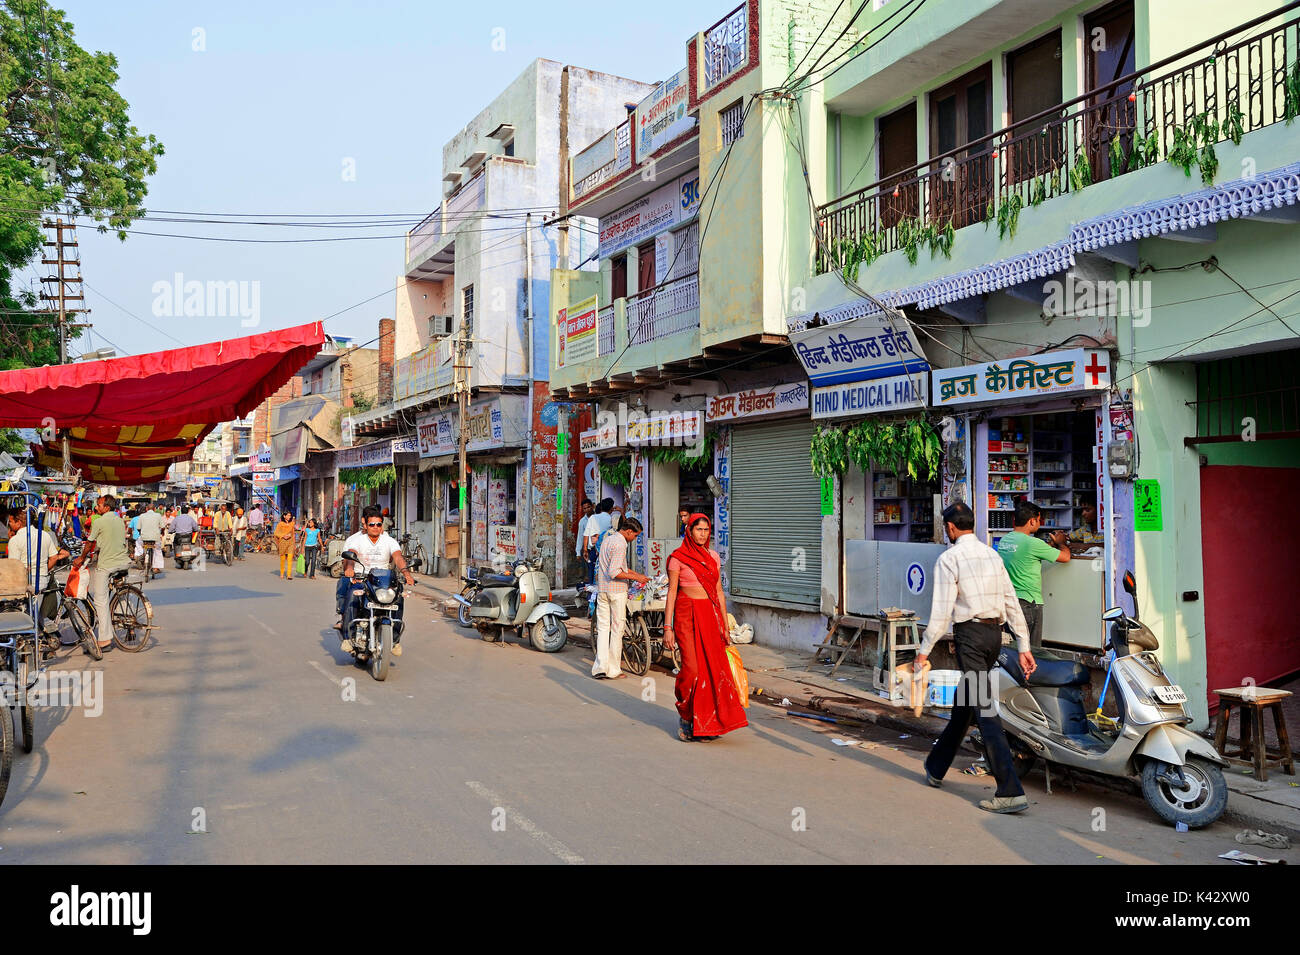 Rue commerçante, Bharatpur, Rajasthan, Inde | Einkaufsstrasse, Bharatpur, Rajasthan, Indien Banque D'Images